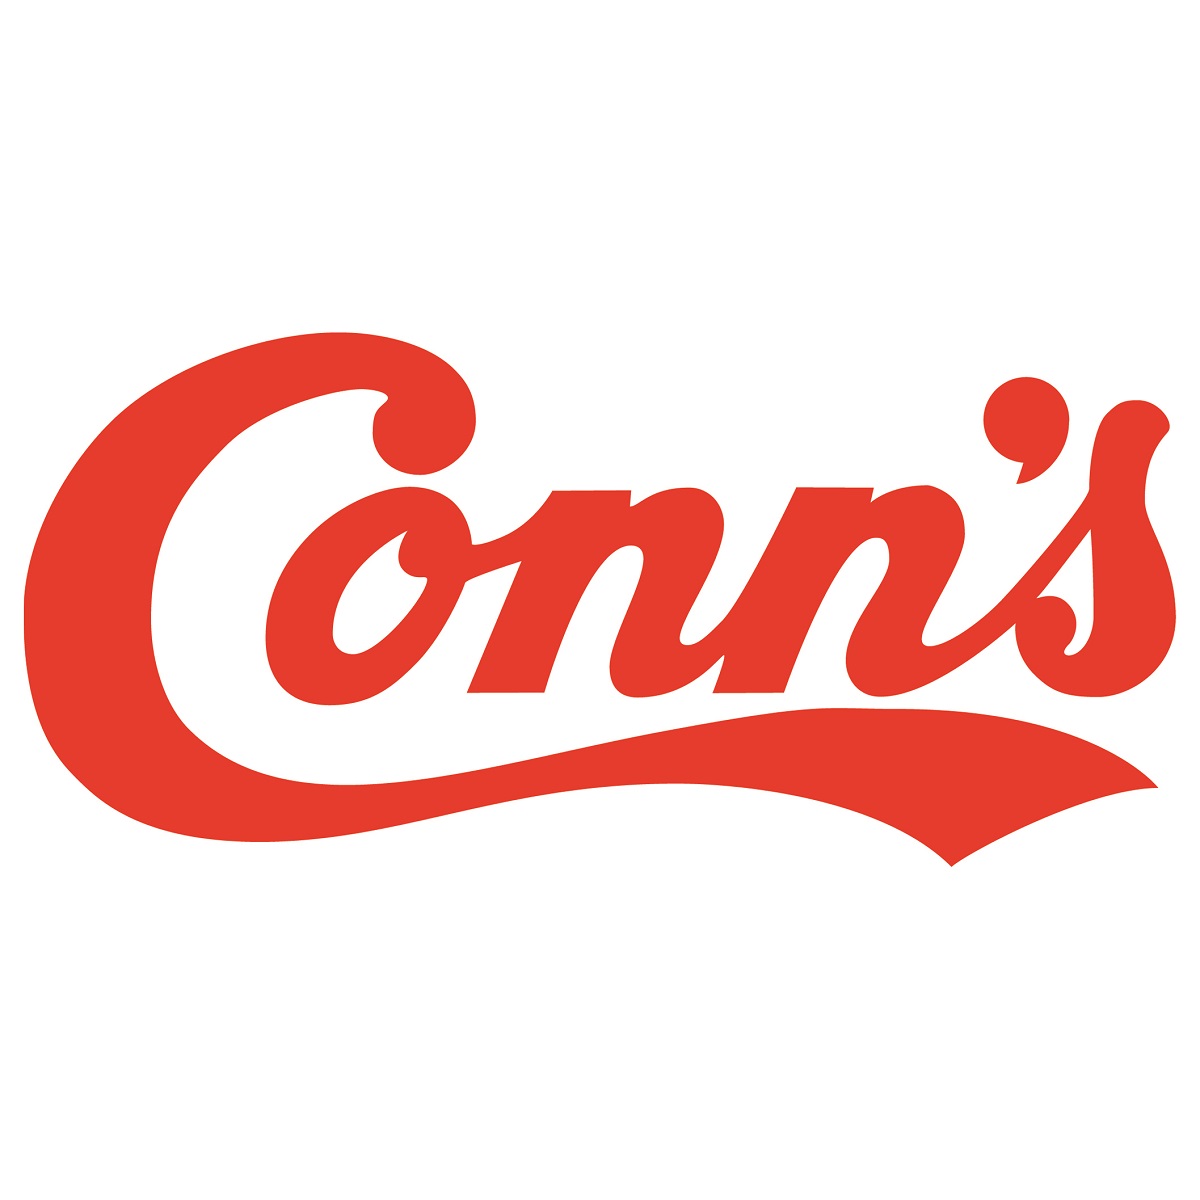 Conn's HomePlus Logo